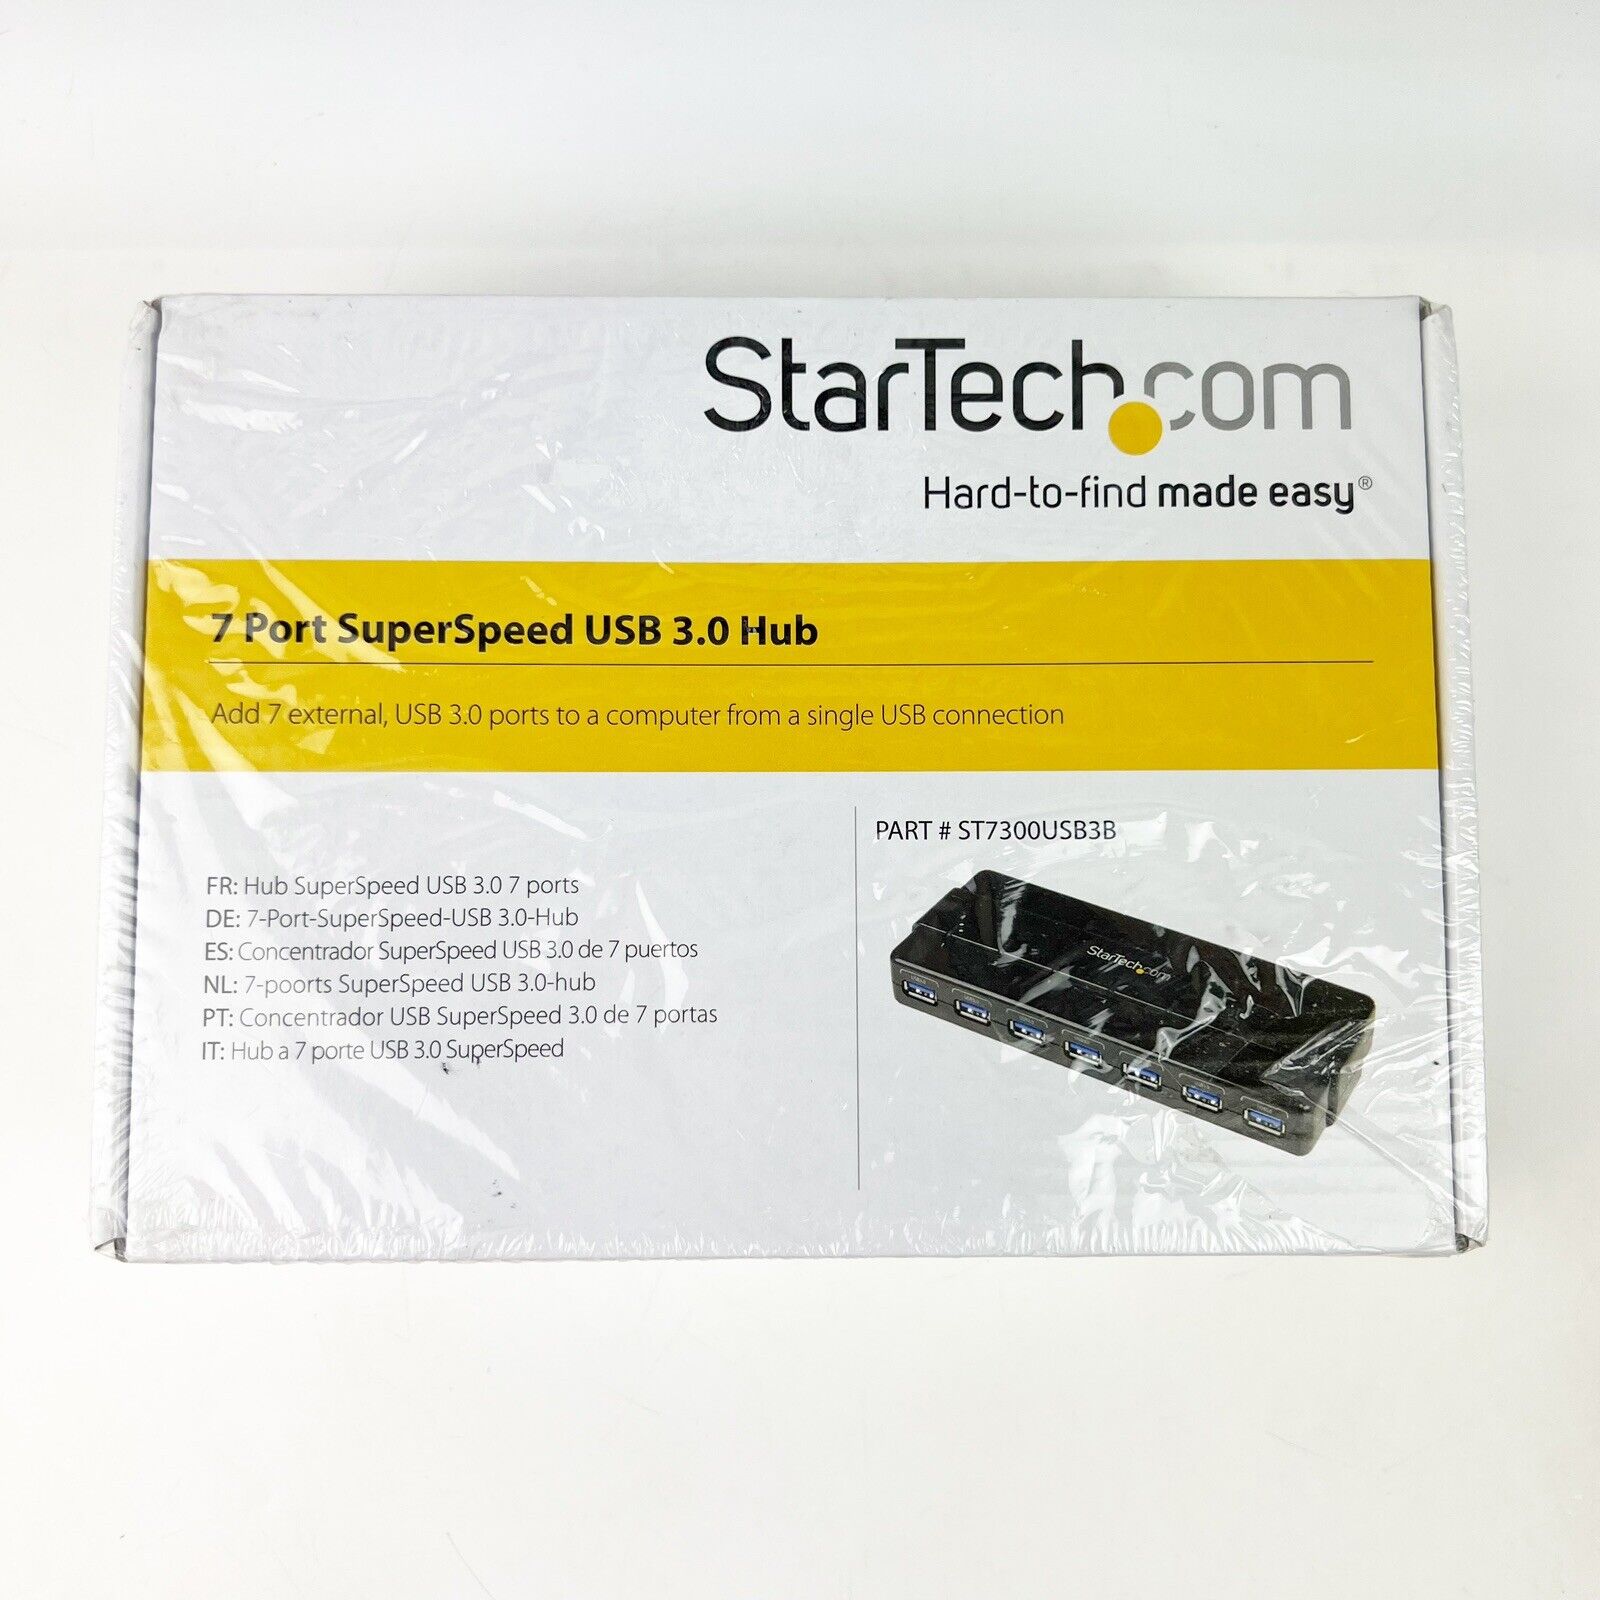 NEW StarTech.com 7 Port SuperSpeed USB 3.0 Hub Sealed